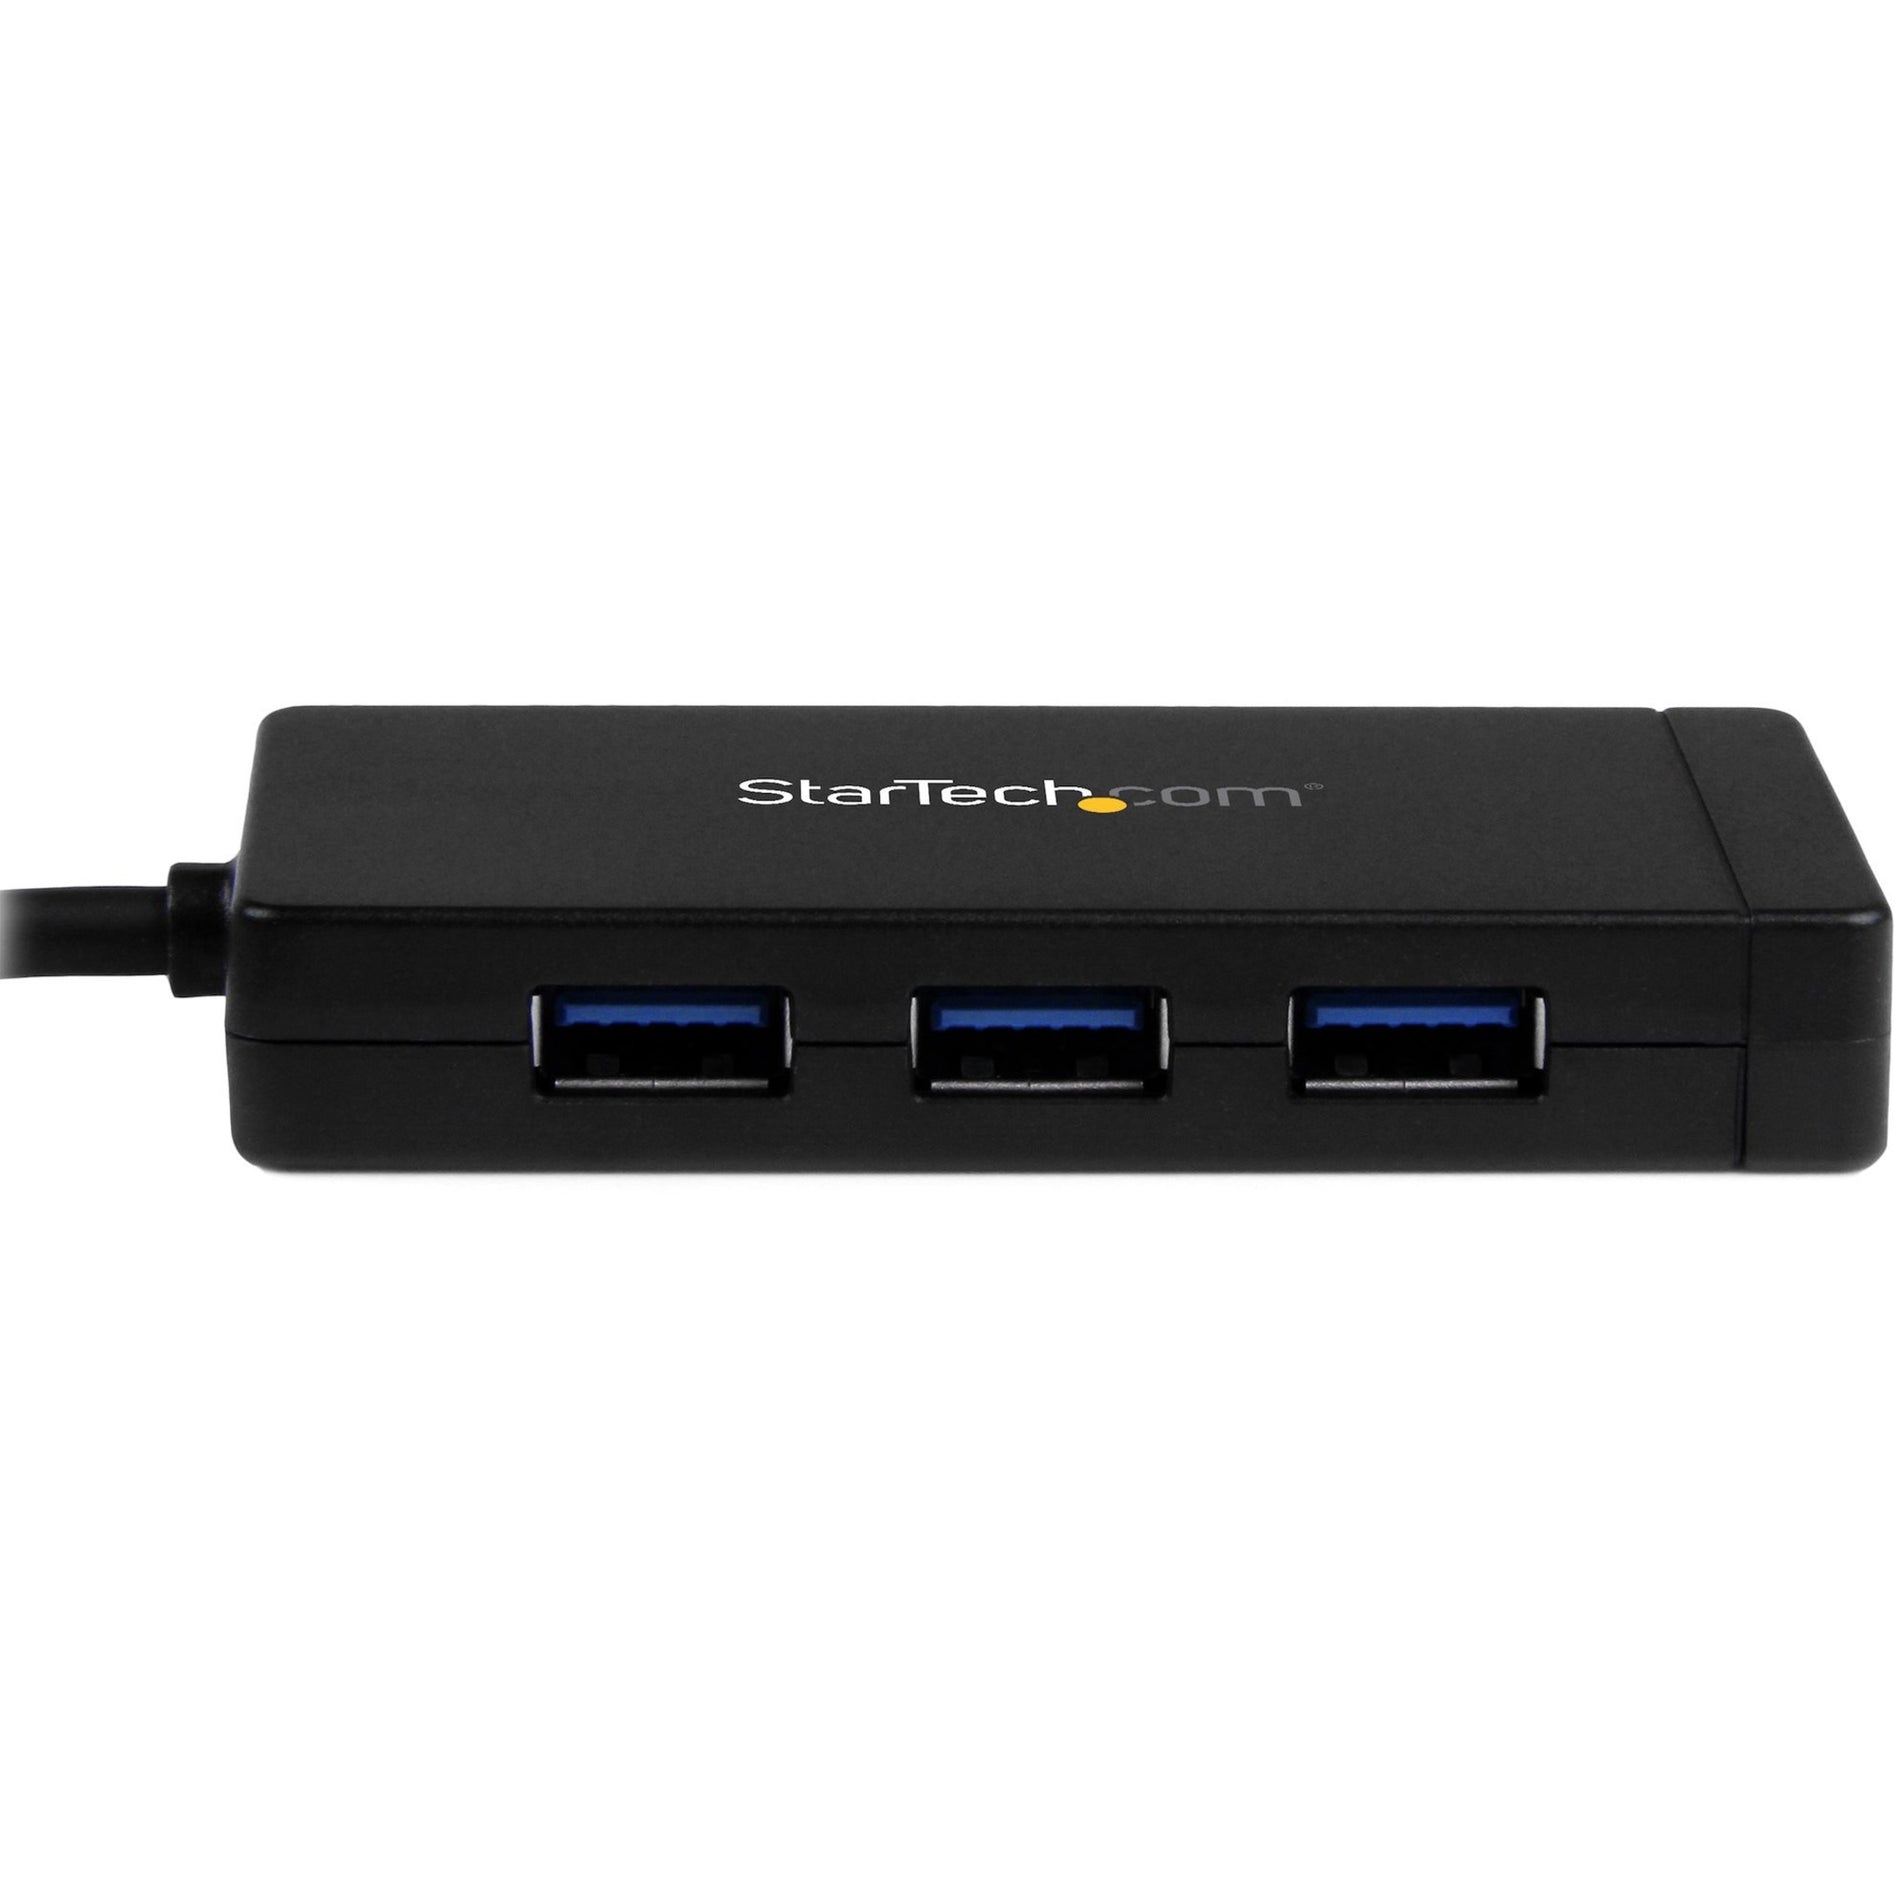 StarTech.com HB30C3A1GE 3-port USB 3.0 Hub Plus GbE, USB C Hub with Gigabit Ethernet